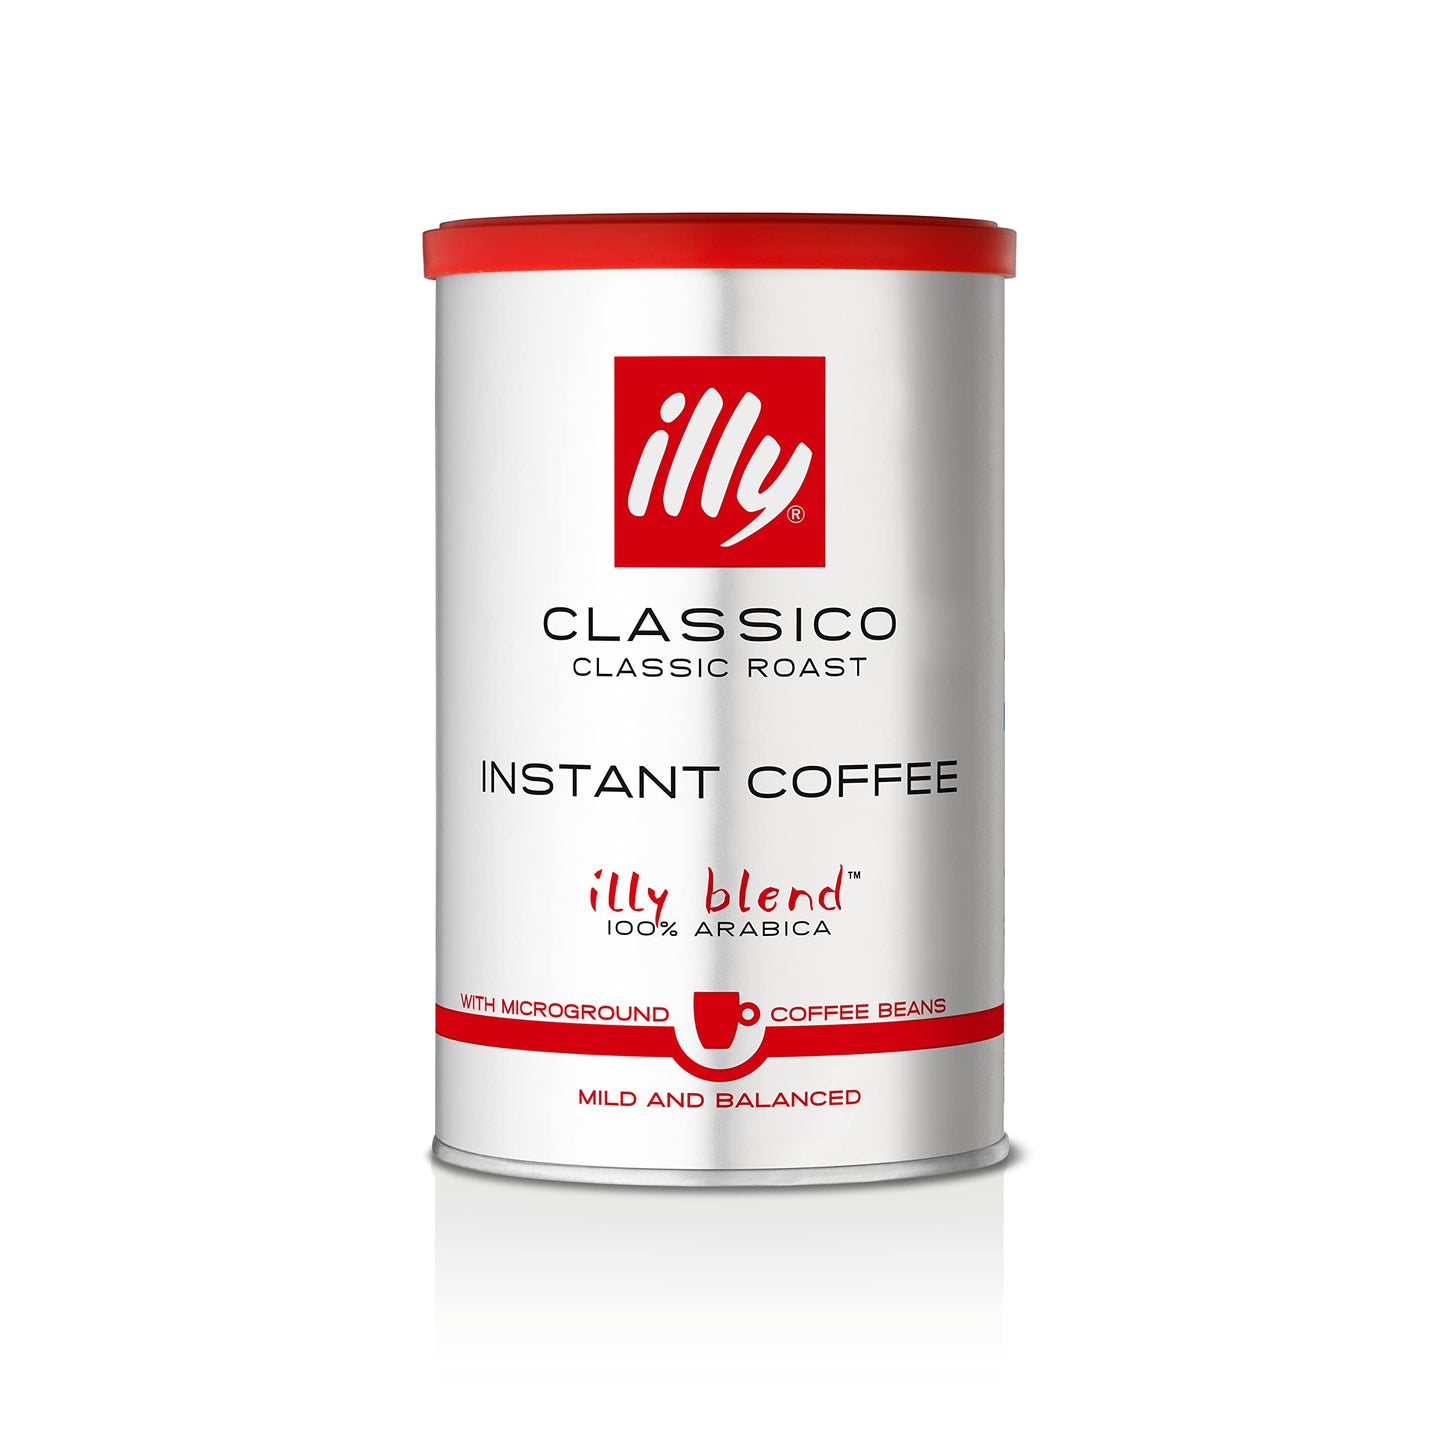 Illy Classico Classic Roast instant coffee